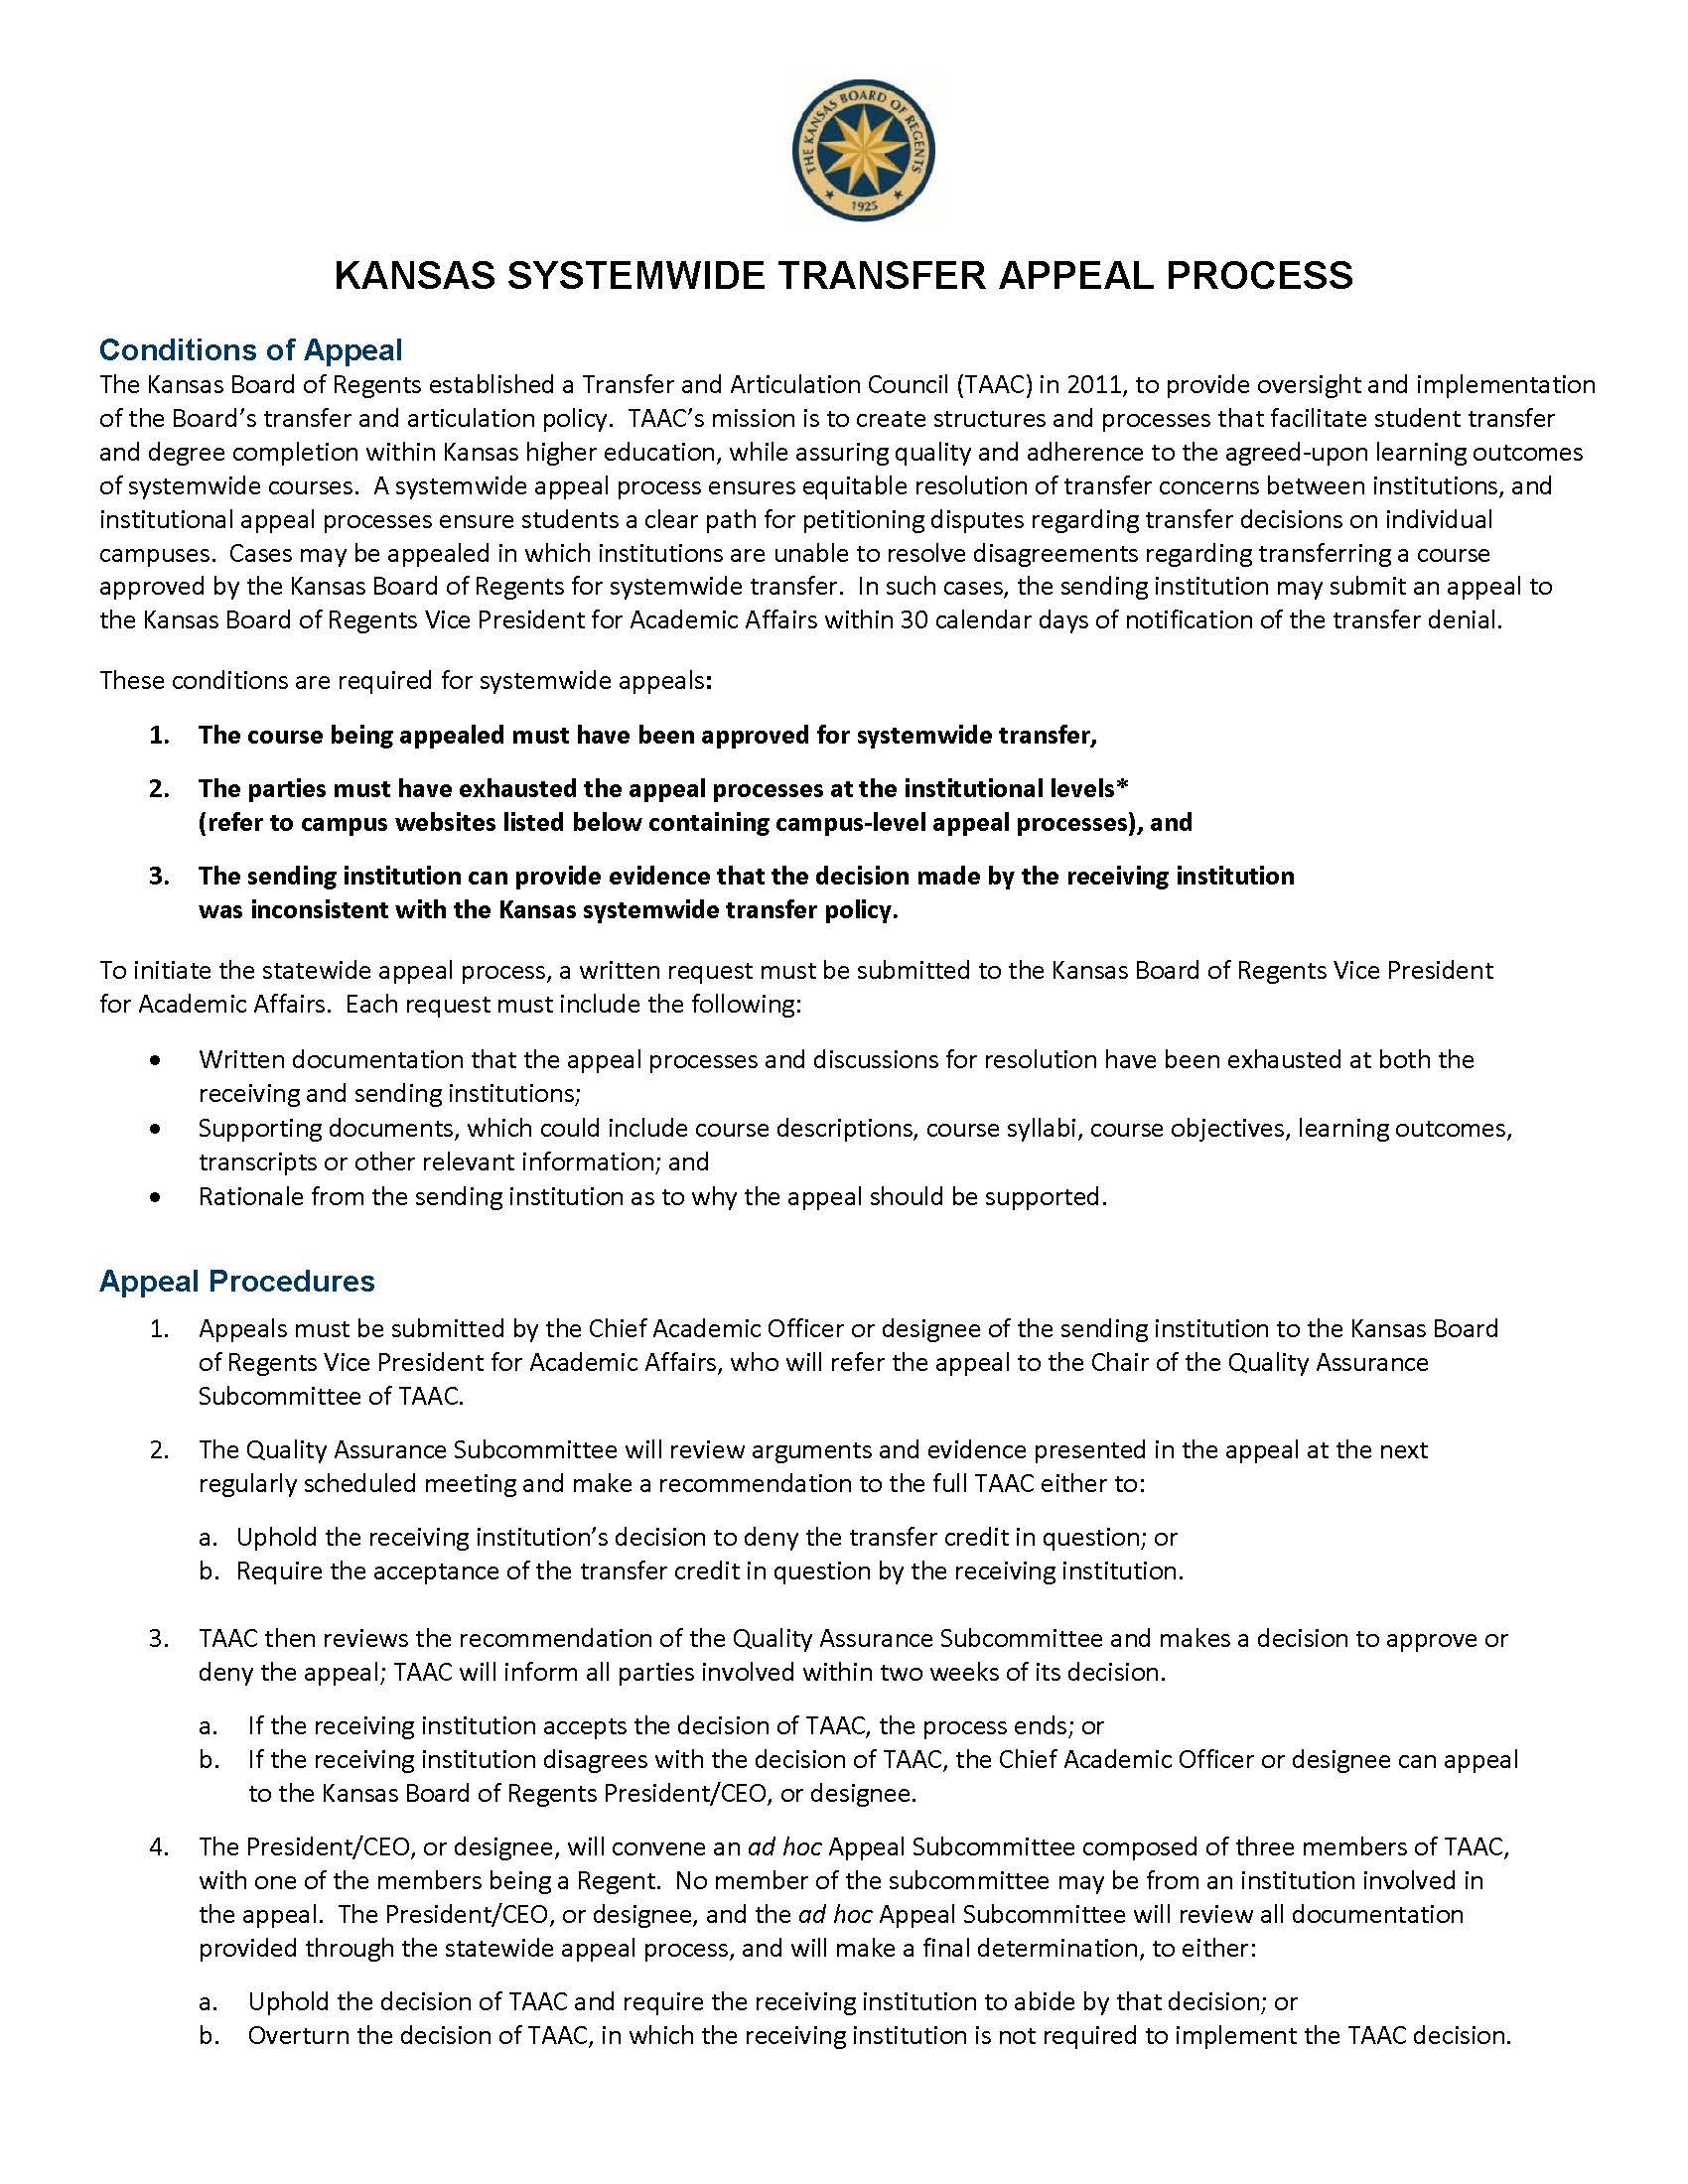 AA TAAC KANSAS SYSTEMWIDE TRANSFER APPEAL PROCESS 11 16